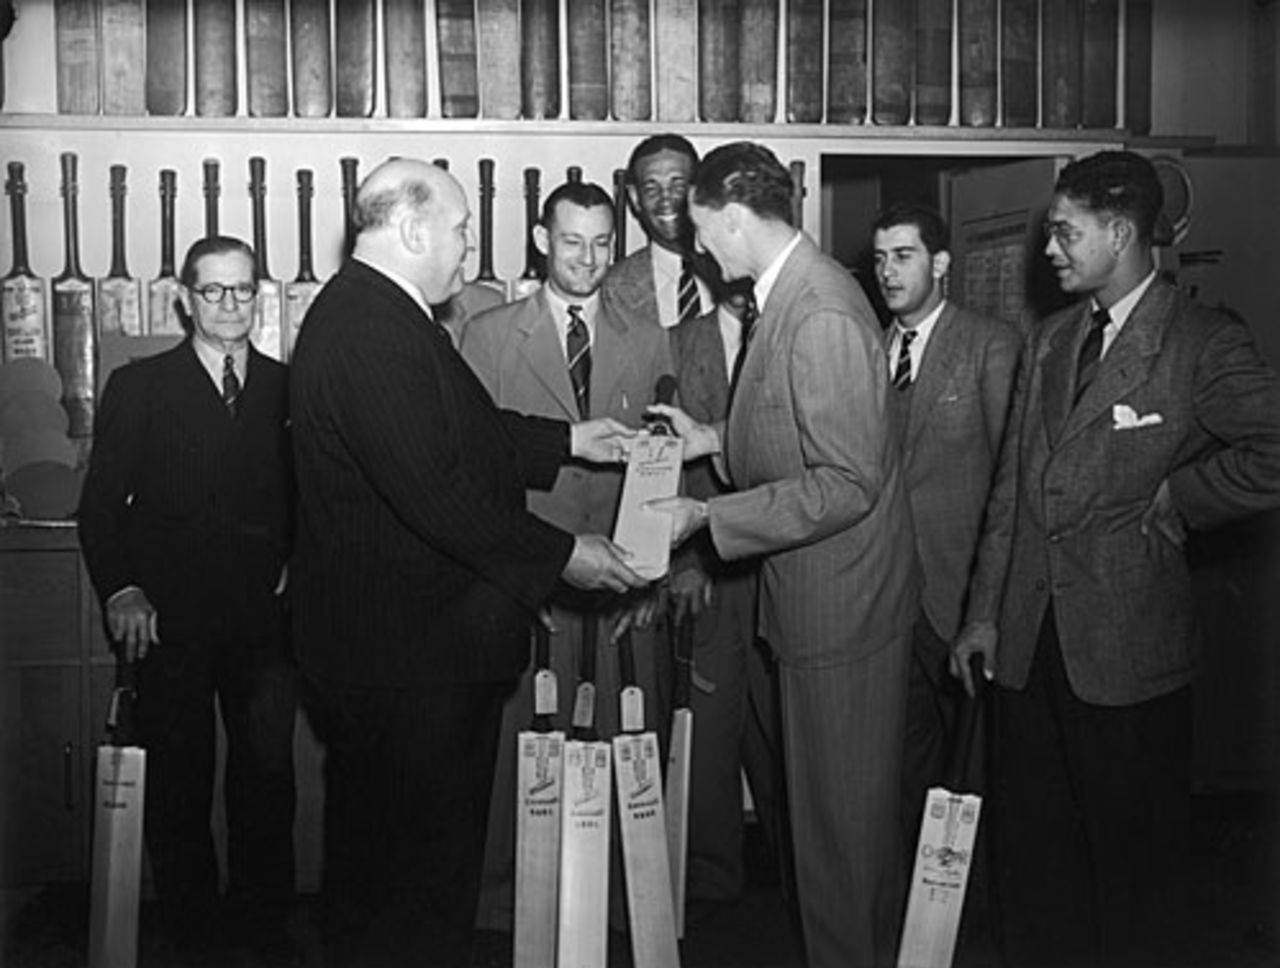 Wisden director HA Tipper presenting bats to Jeffrey Stollmeyer, September 20, 1950